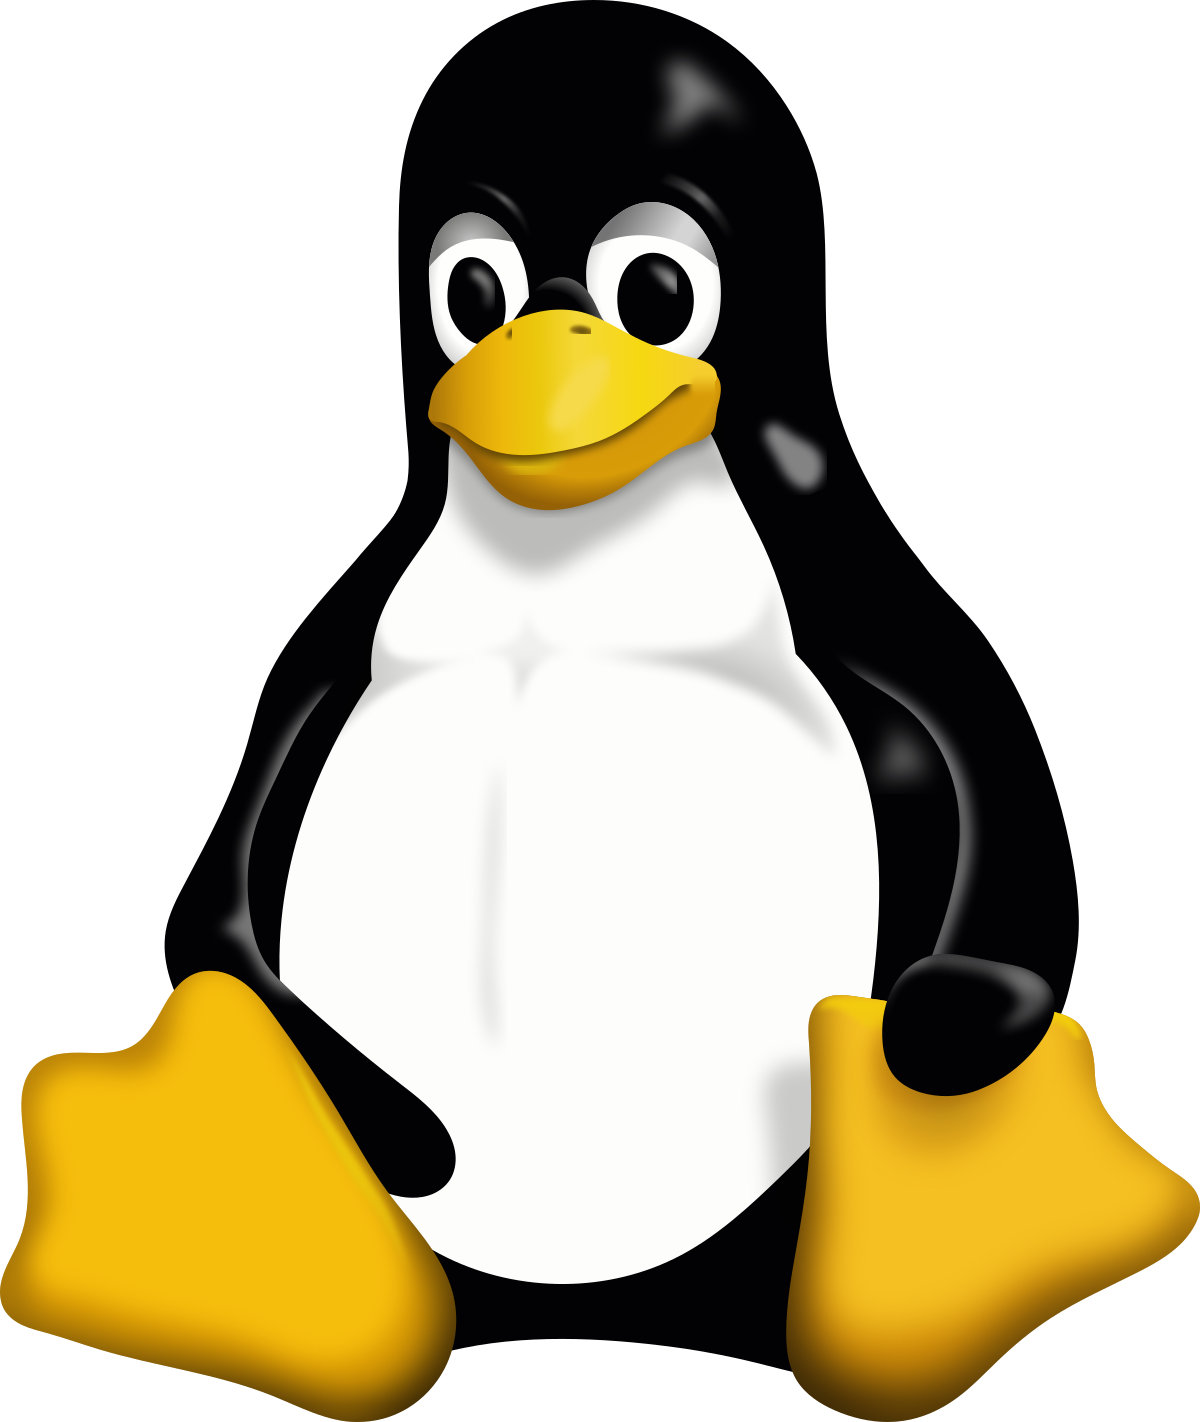 linux symbol